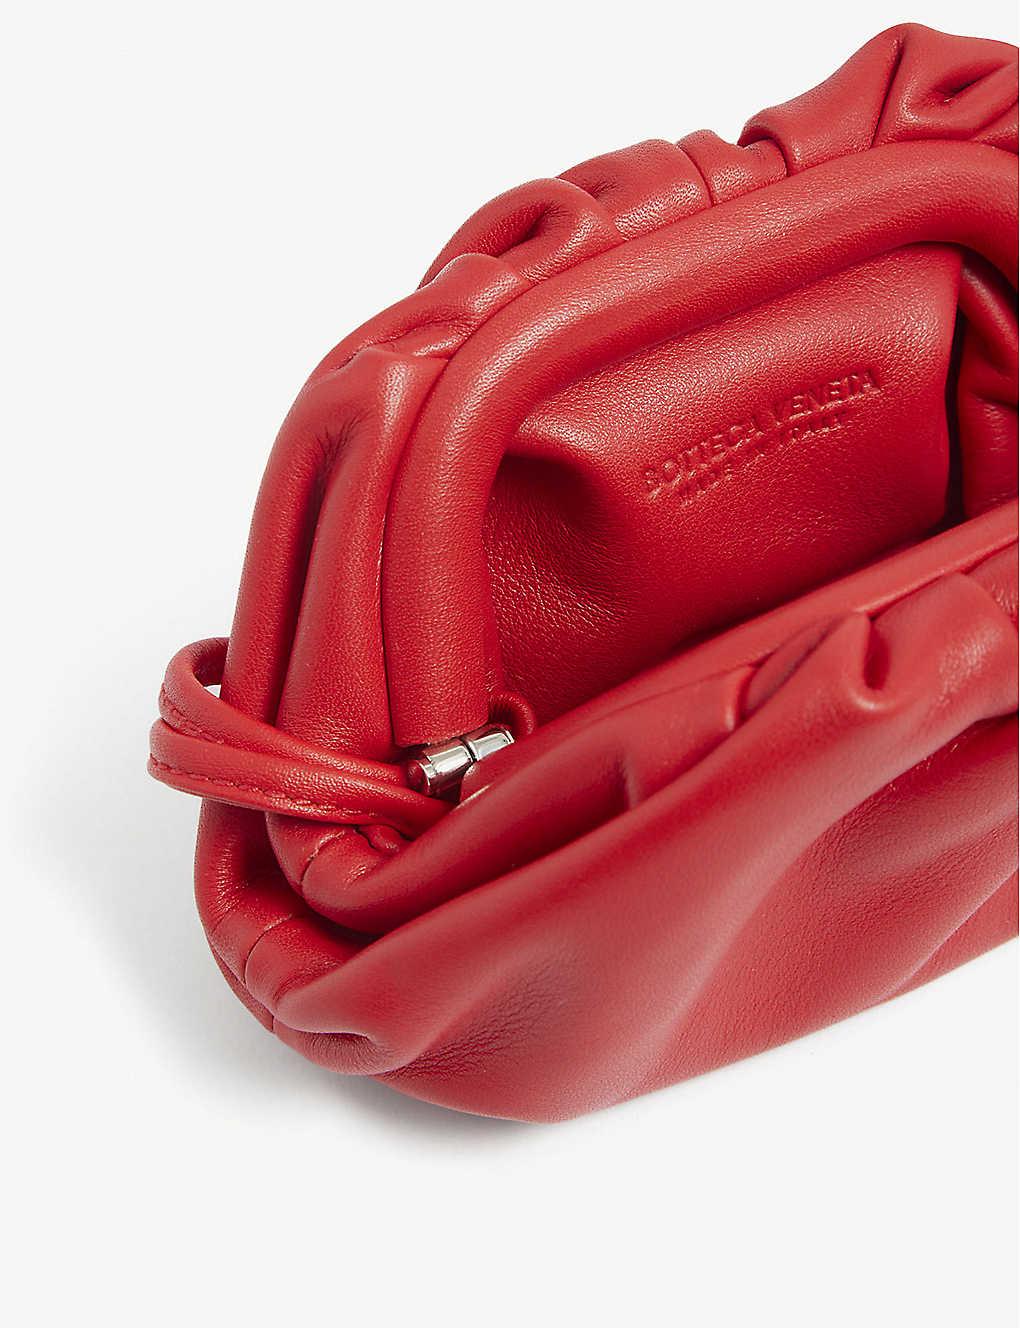 Bottega Veneta The Pouch Micro Leather Clutch in Red - Lyst